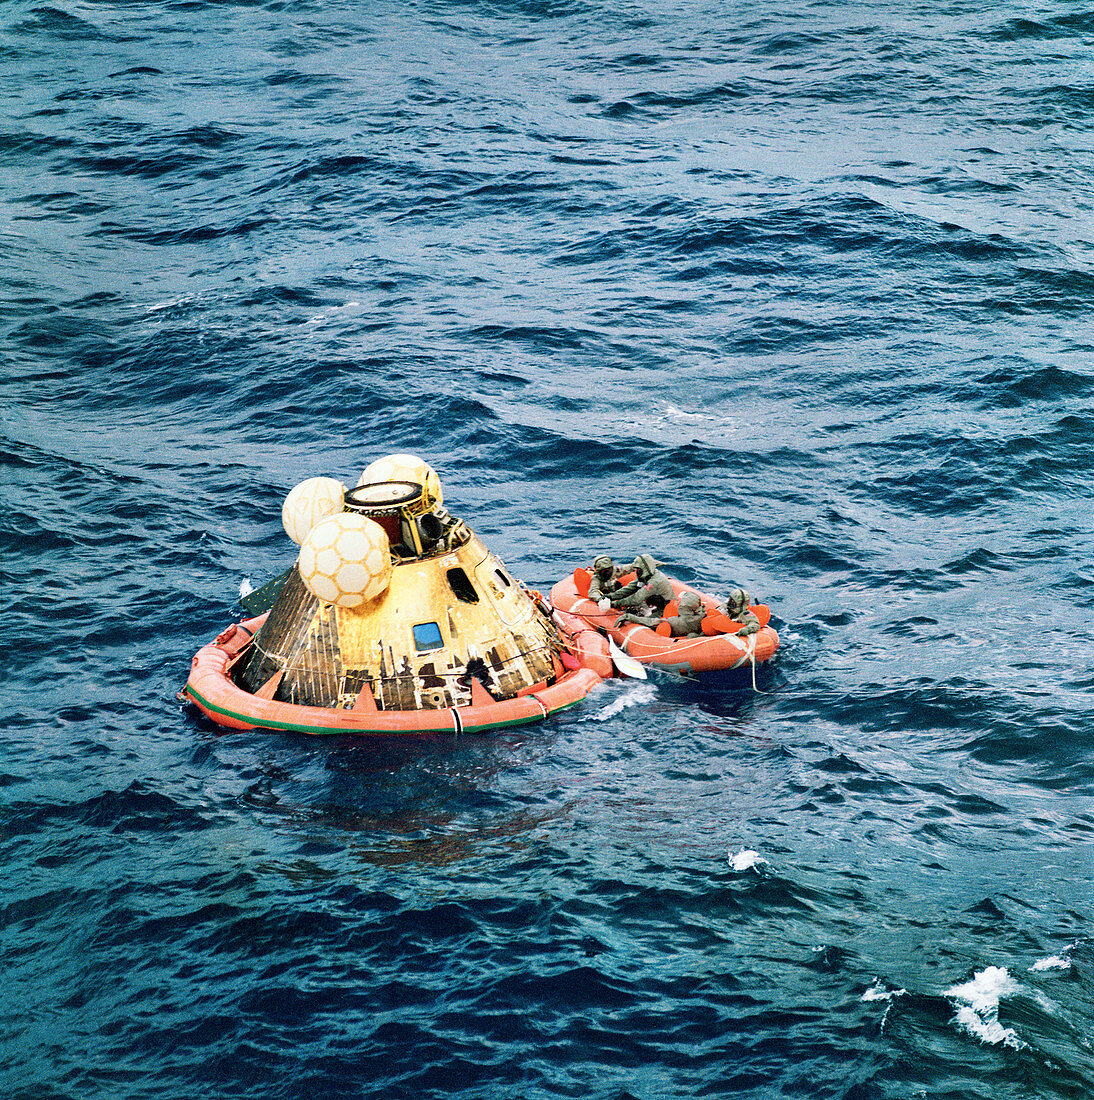 Apollo 11 recovery after splashdown, 1969